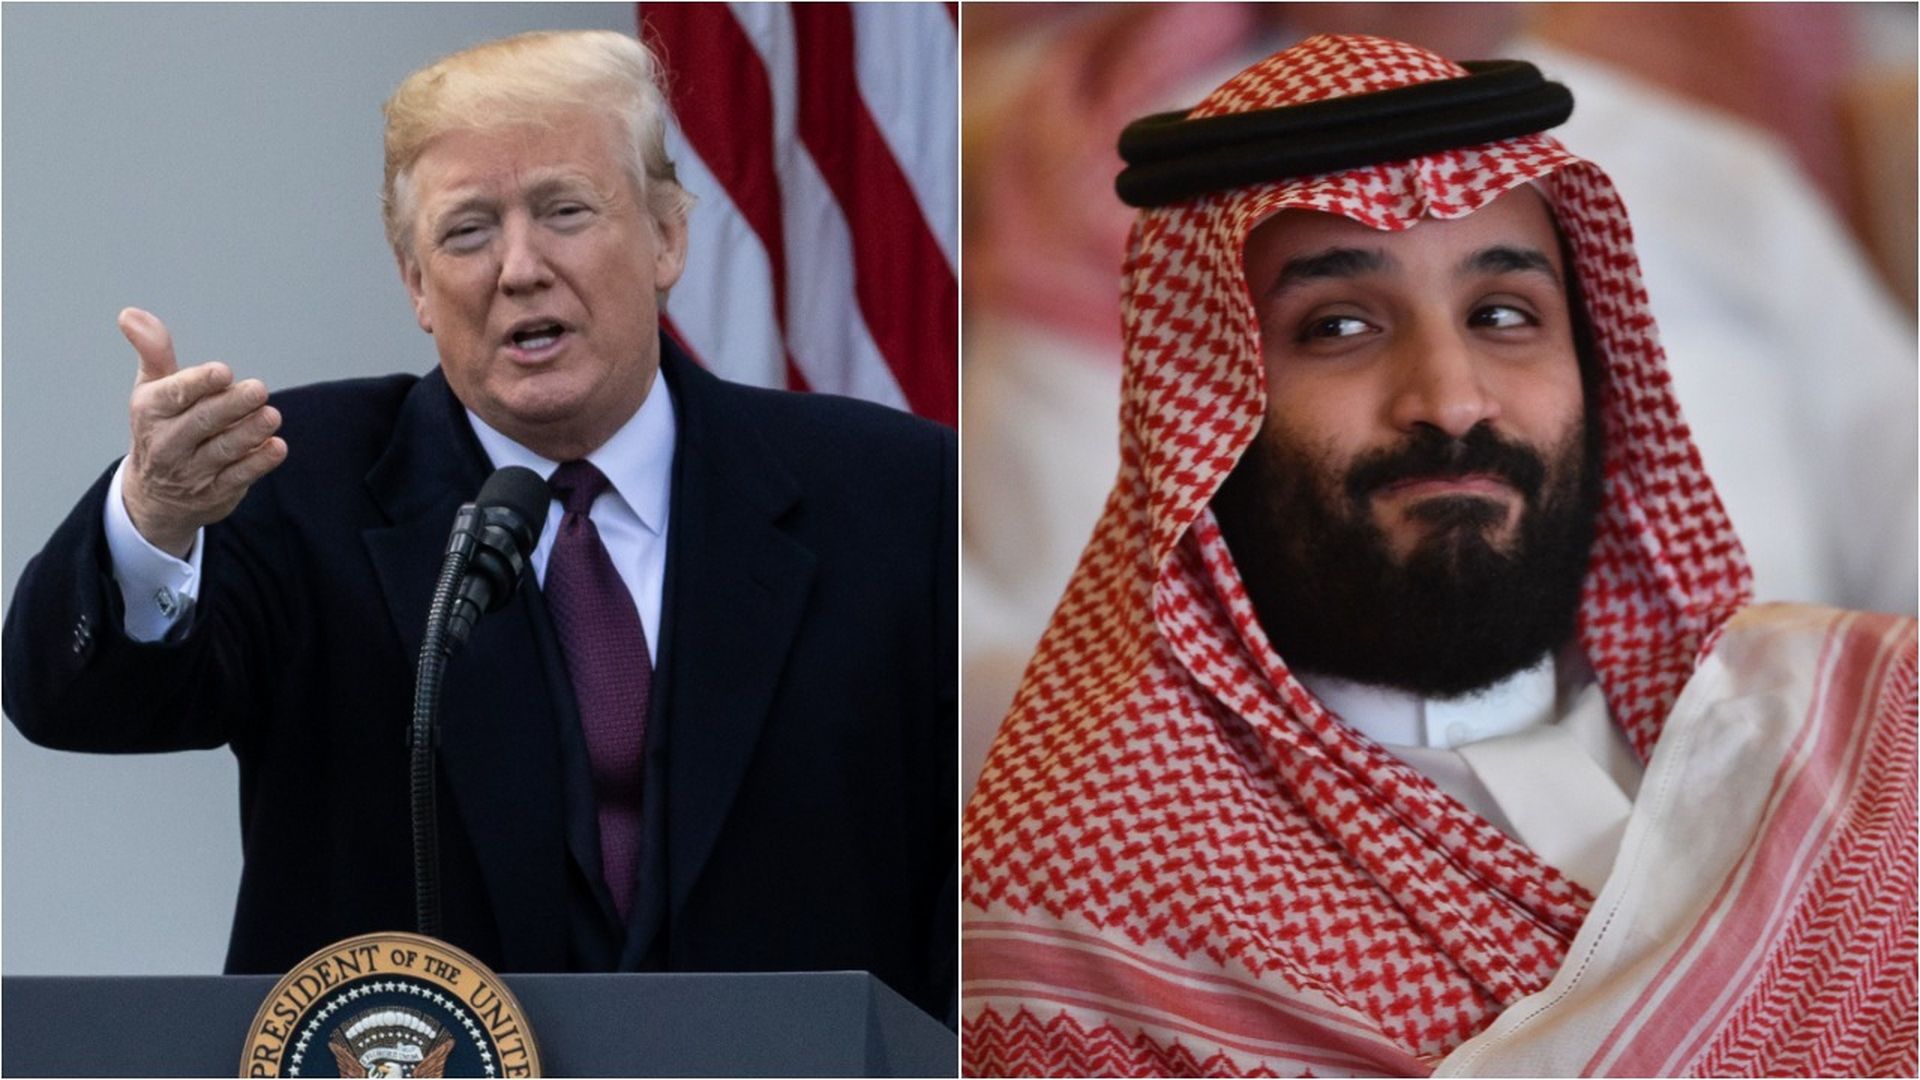 A split-screen image of President Trump and Mohammed bin Salman.